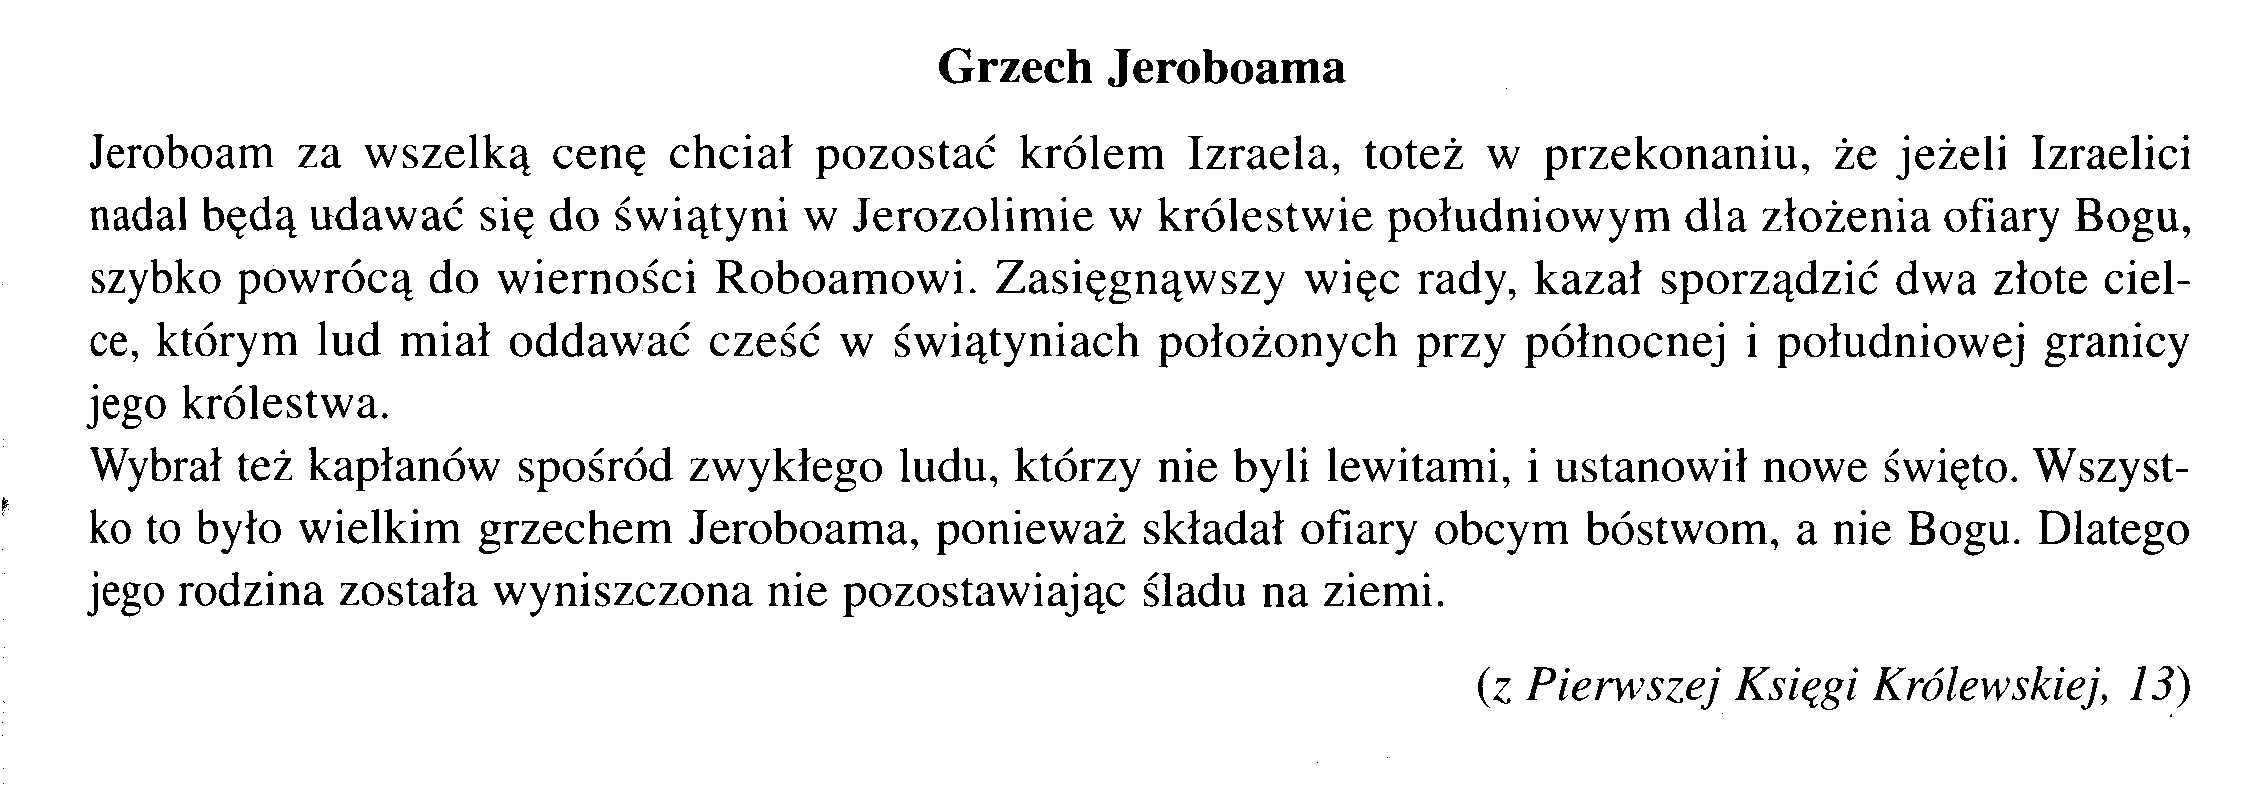 BIBLIJNE - GRZECH JEROBOAMA.bmp